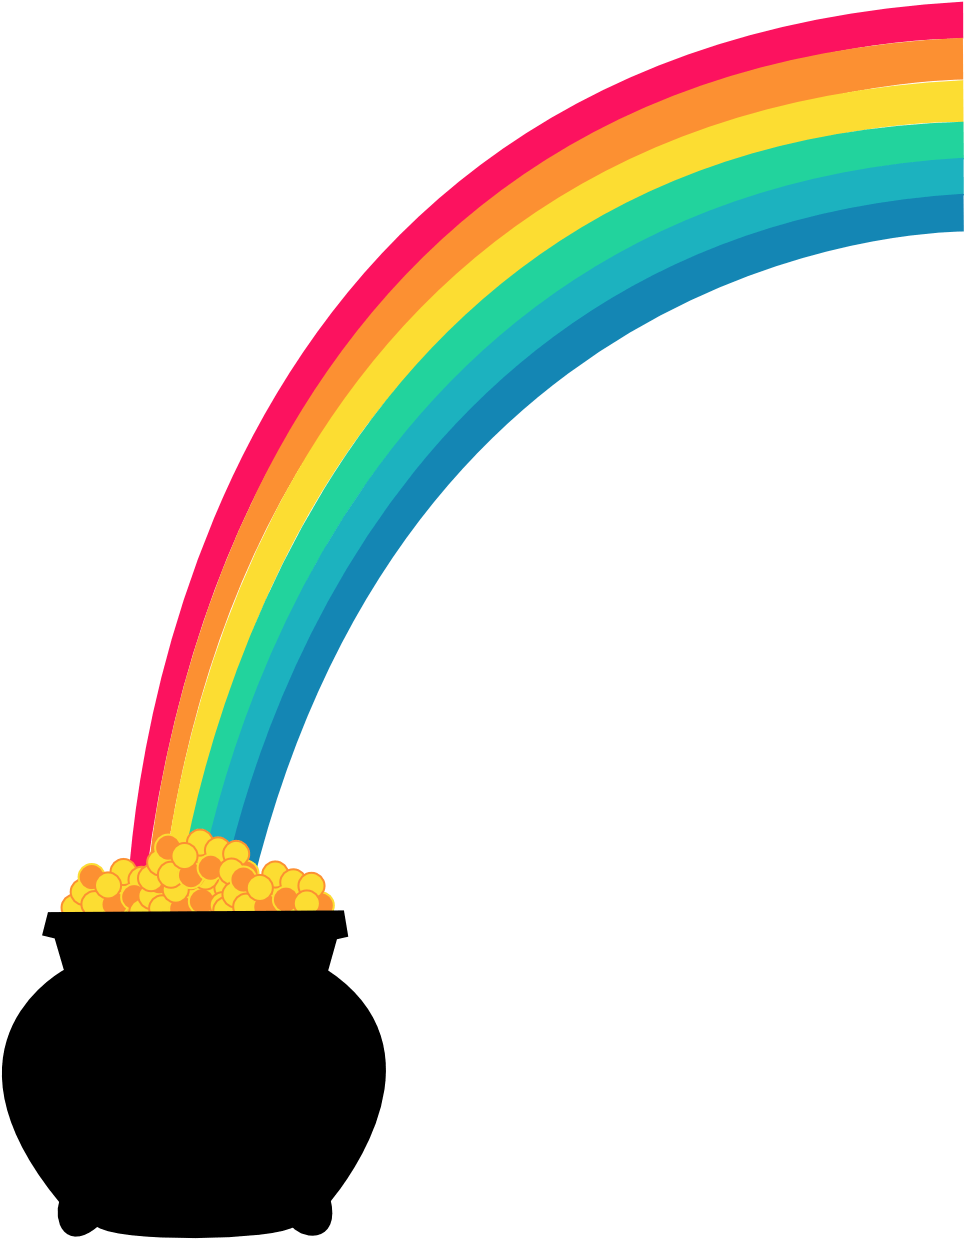 Olla de oro arco iris PNG Picture